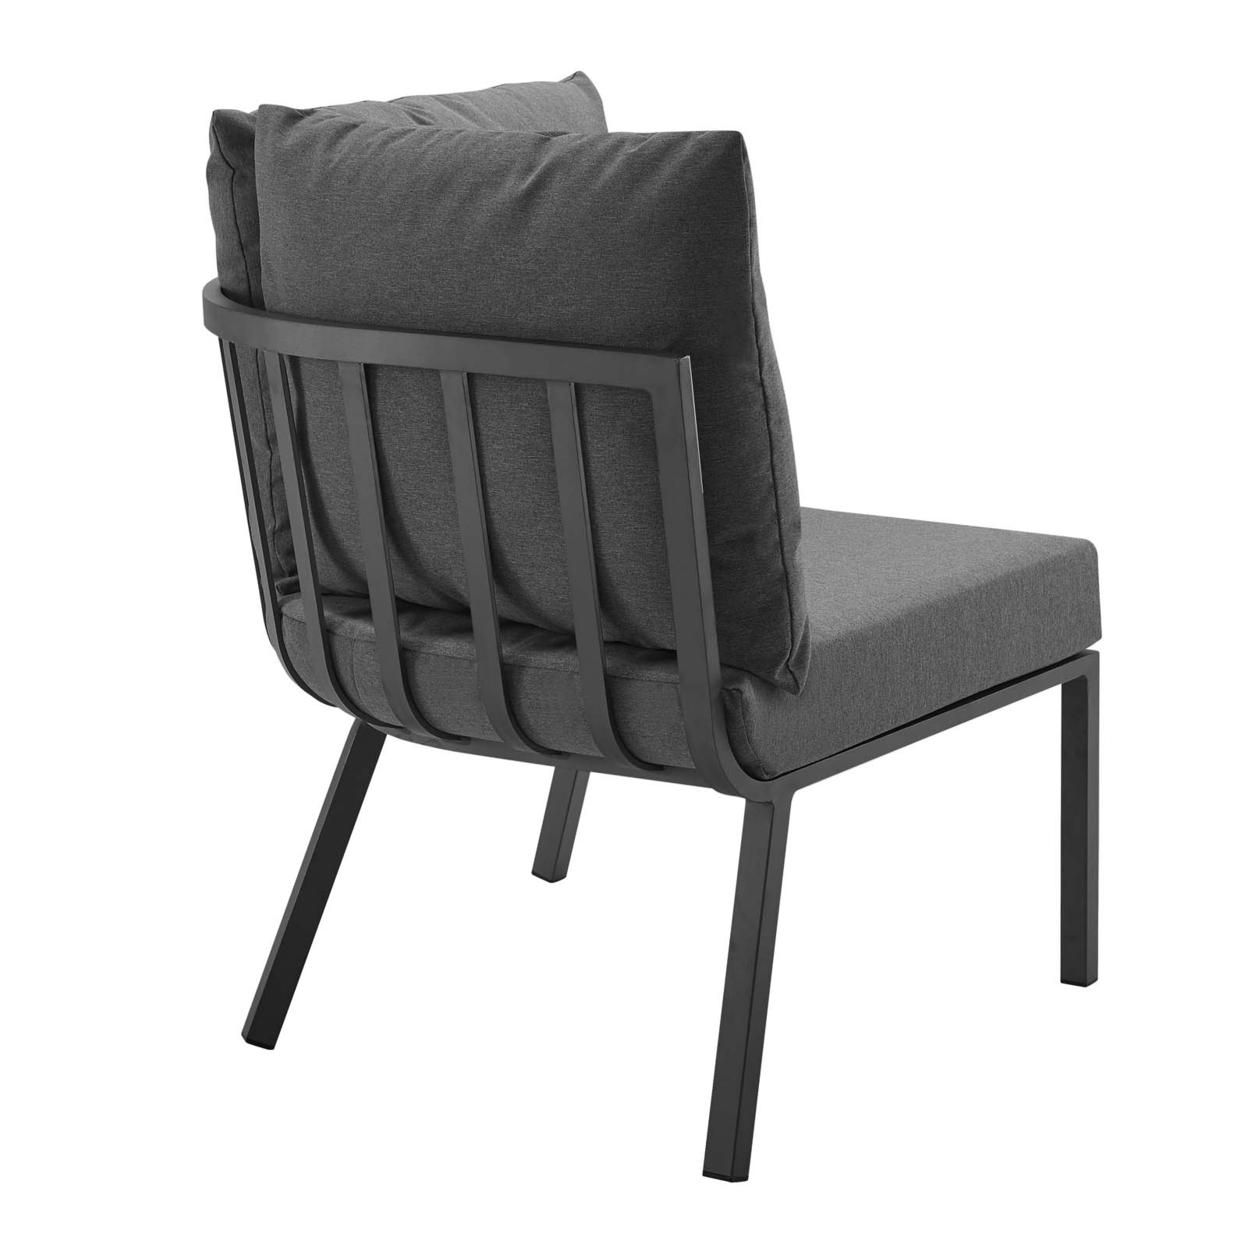 Riverside Outdoor Patio Aluminum Corner Chair,Gray Charcoal